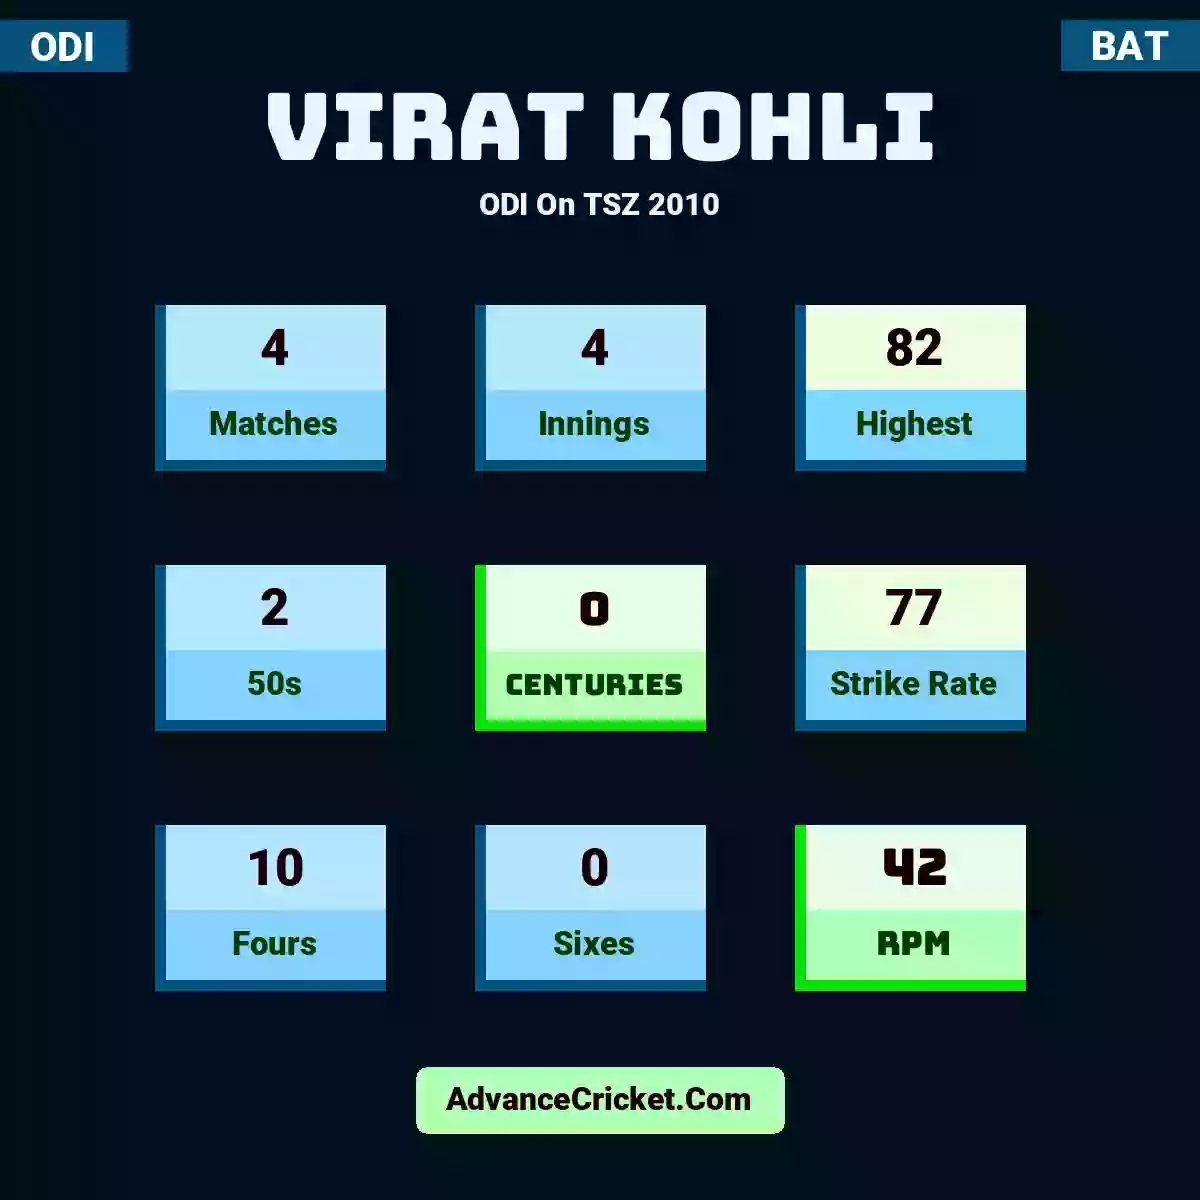 Virat Kohli ODI  On TSZ 2010, Virat Kohli played 4 matches, scored 82 runs as highest, 2 half-centuries, and 0 centuries, with a strike rate of 77. V.Kohli hit 10 fours and 0 sixes, with an RPM of 42.